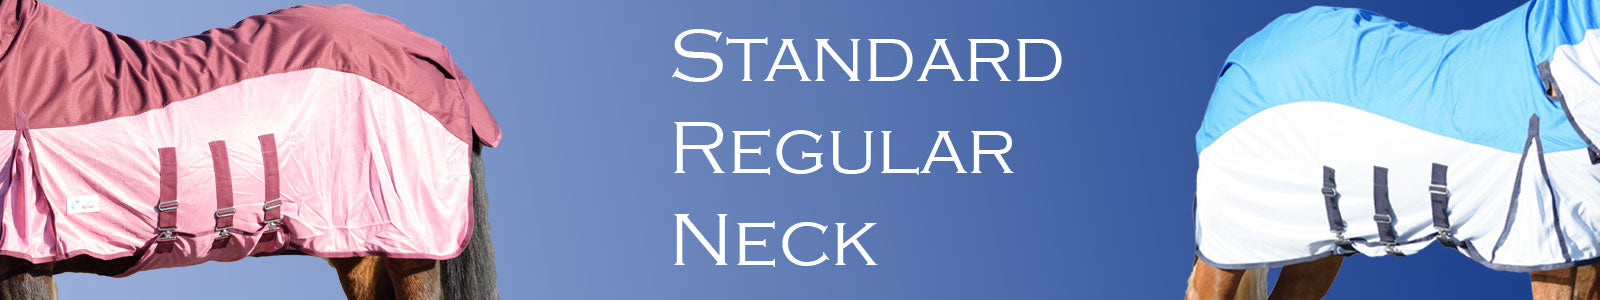 Standard Regular Neck - Tack24